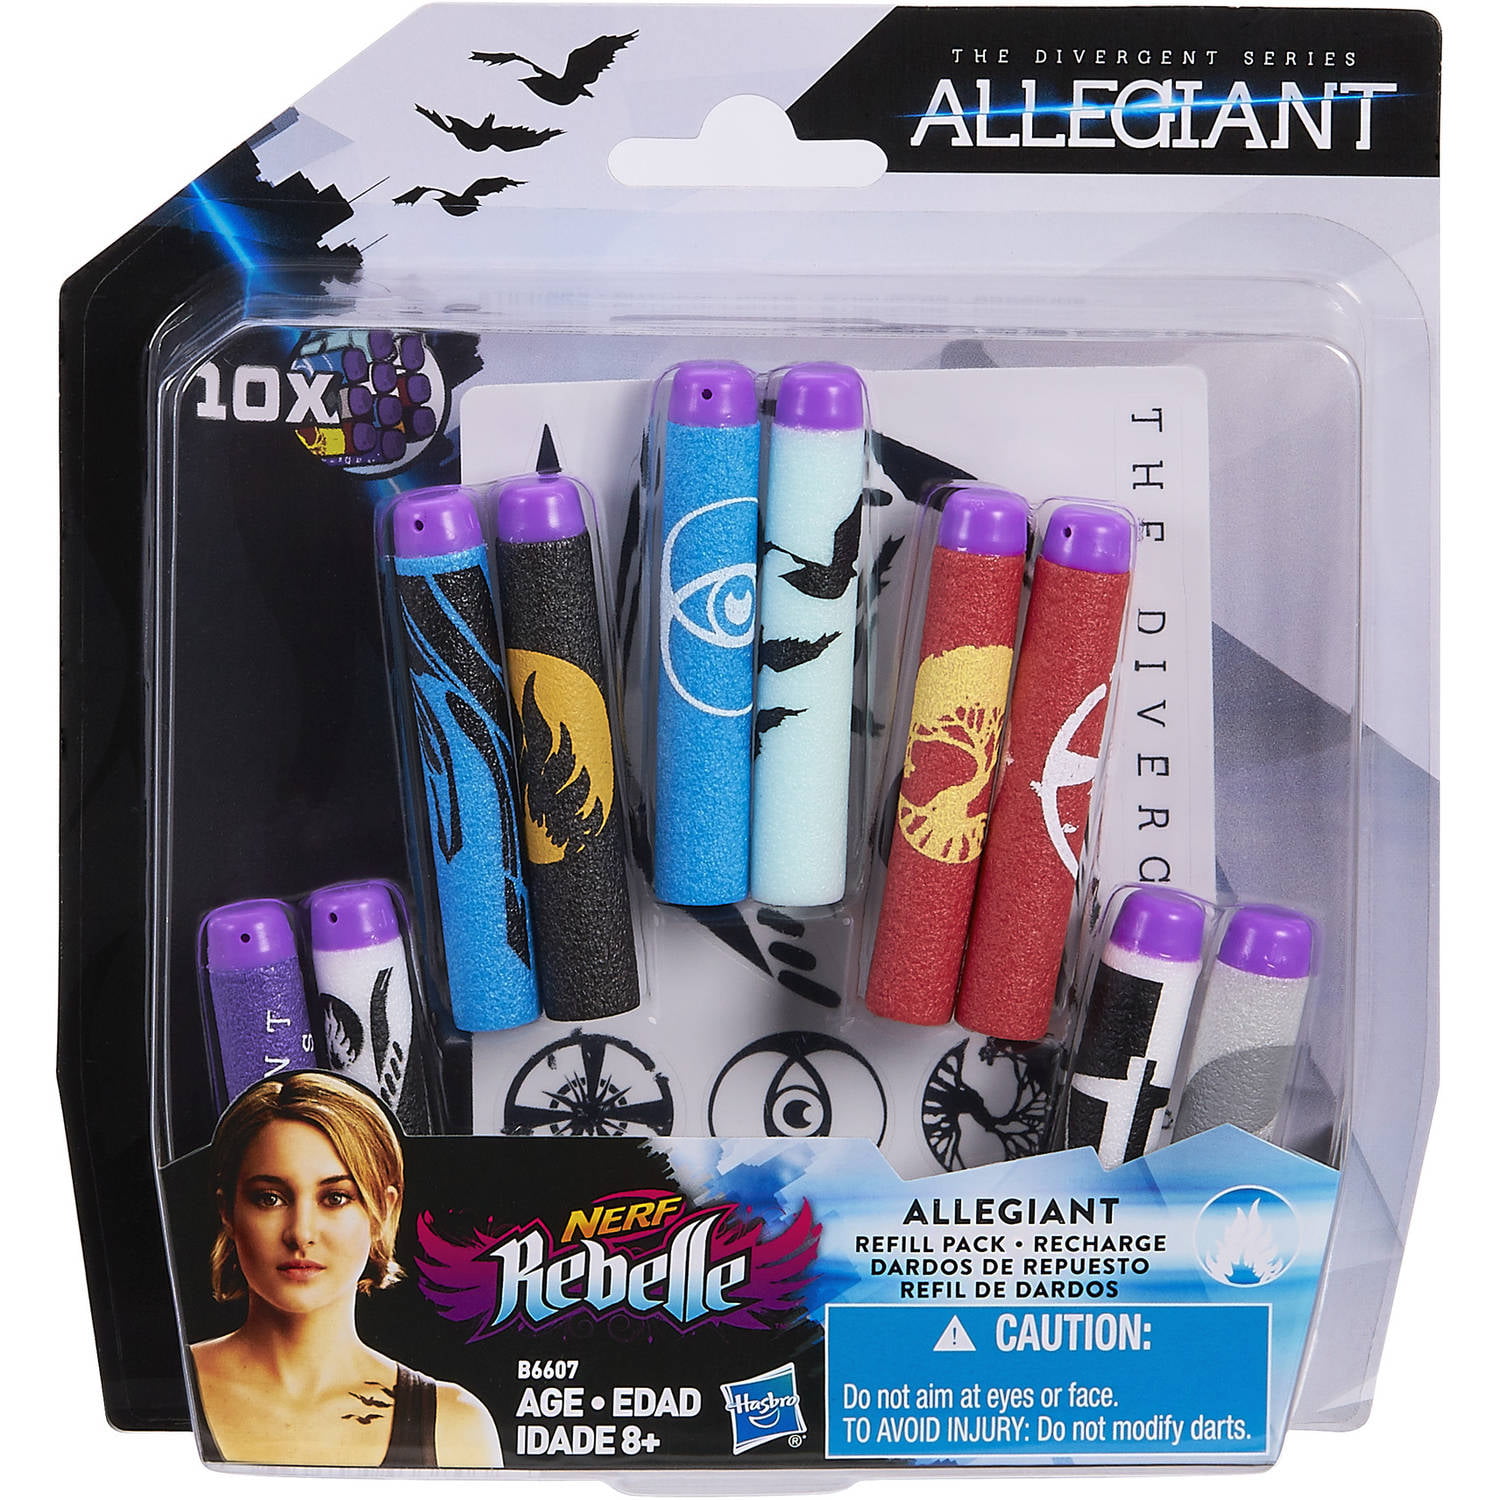 Mellem Ydmyg angreb Nerf Rebelle The Divergent Series Allegiant Refill Pack, Includes 10 Darts  - Walmart.com